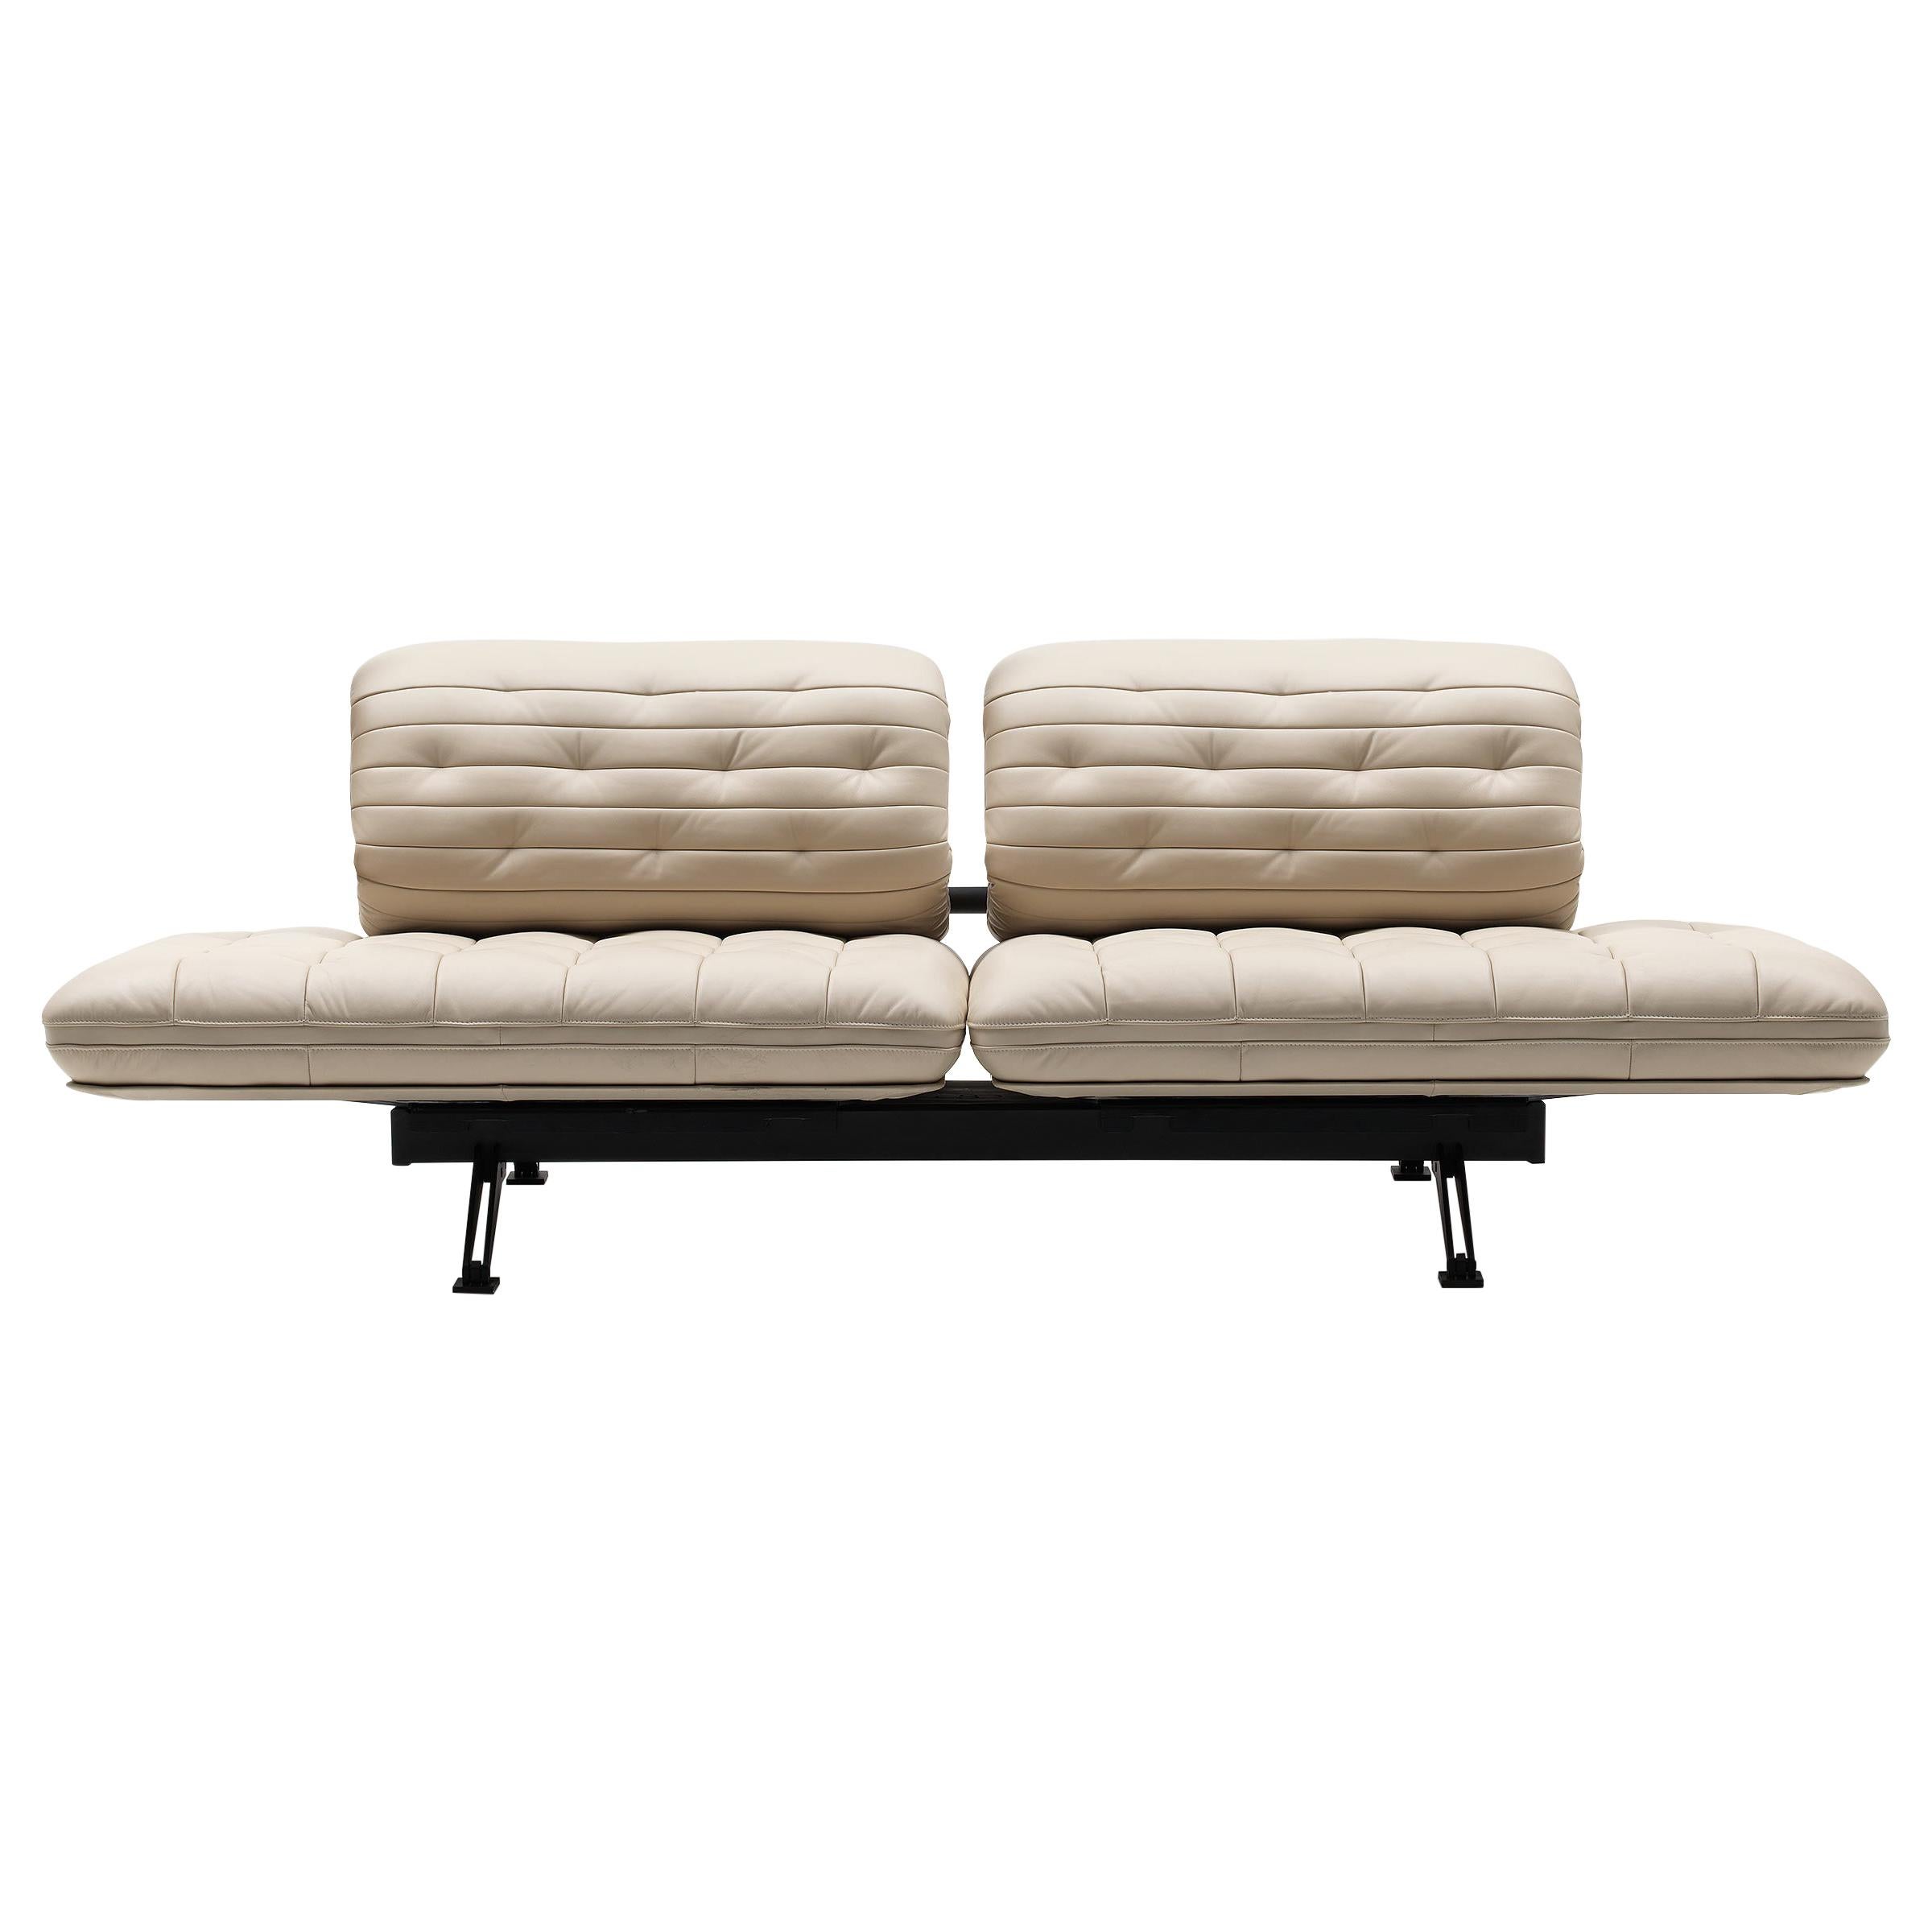 De Sede Ds-490 Modulares Sofa mit cremefarbener Polsterung von De Sede Design Team im Angebot